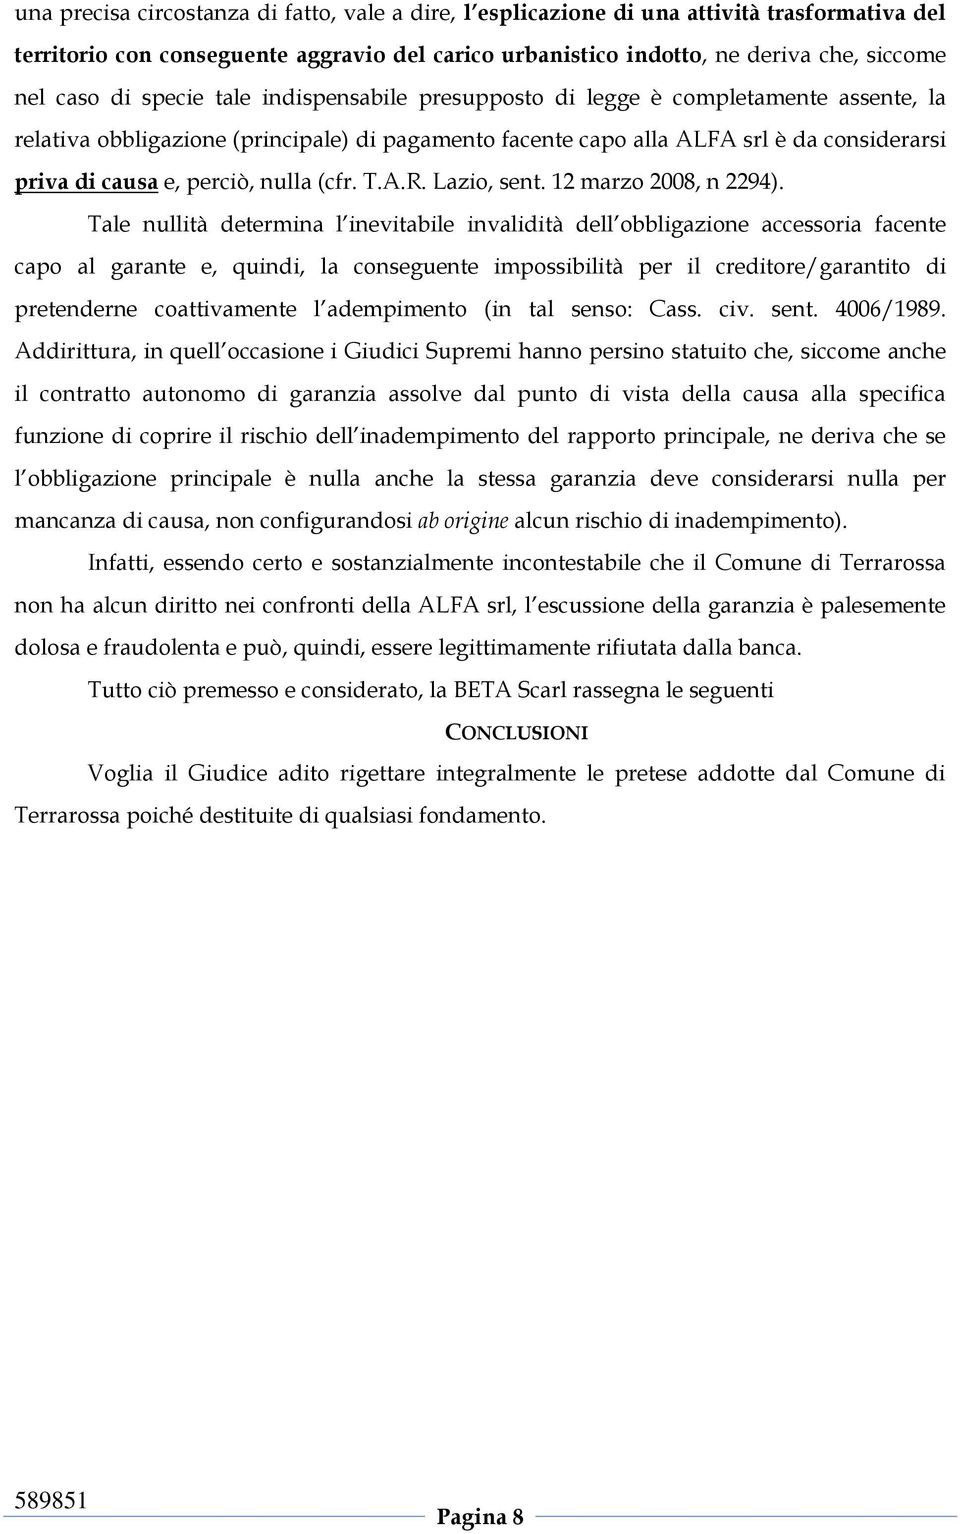 nulla (cfr. T.A.R. Lazio, sent. 12 marzo 2008, n 2294).